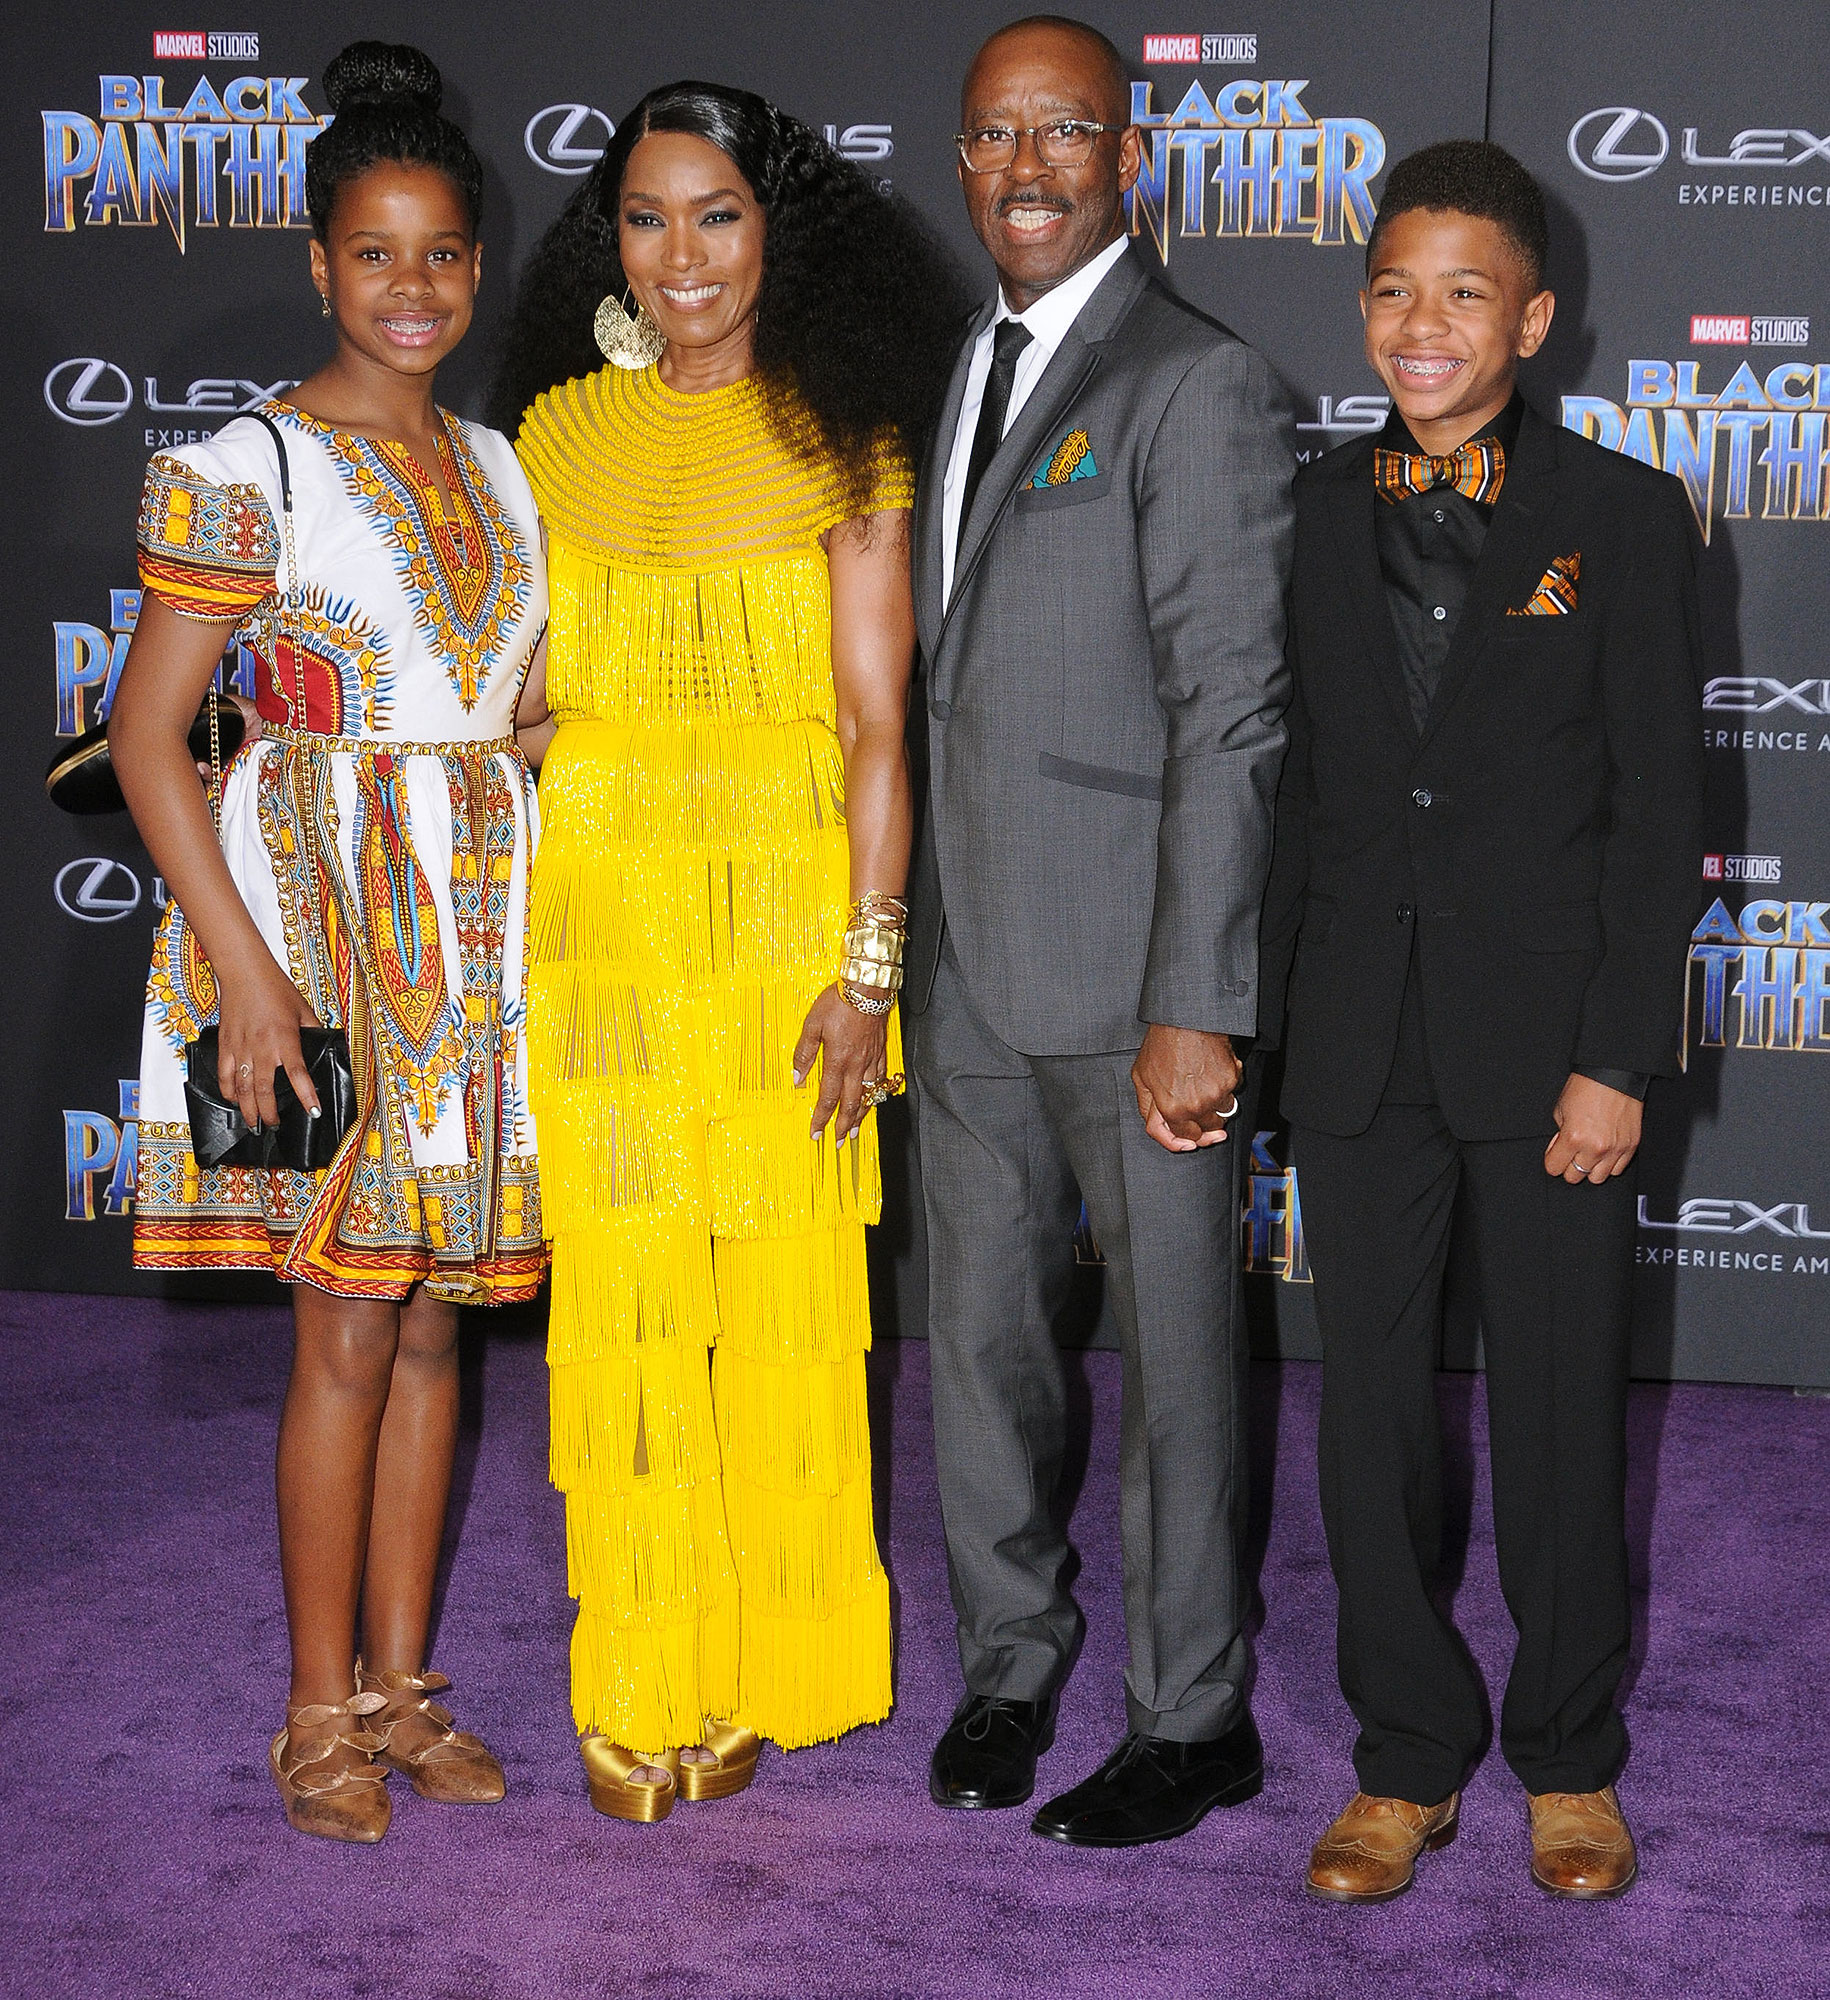 Splash News of Angela Bassett and family on red carpet opening night of superhero movie, Black Panther